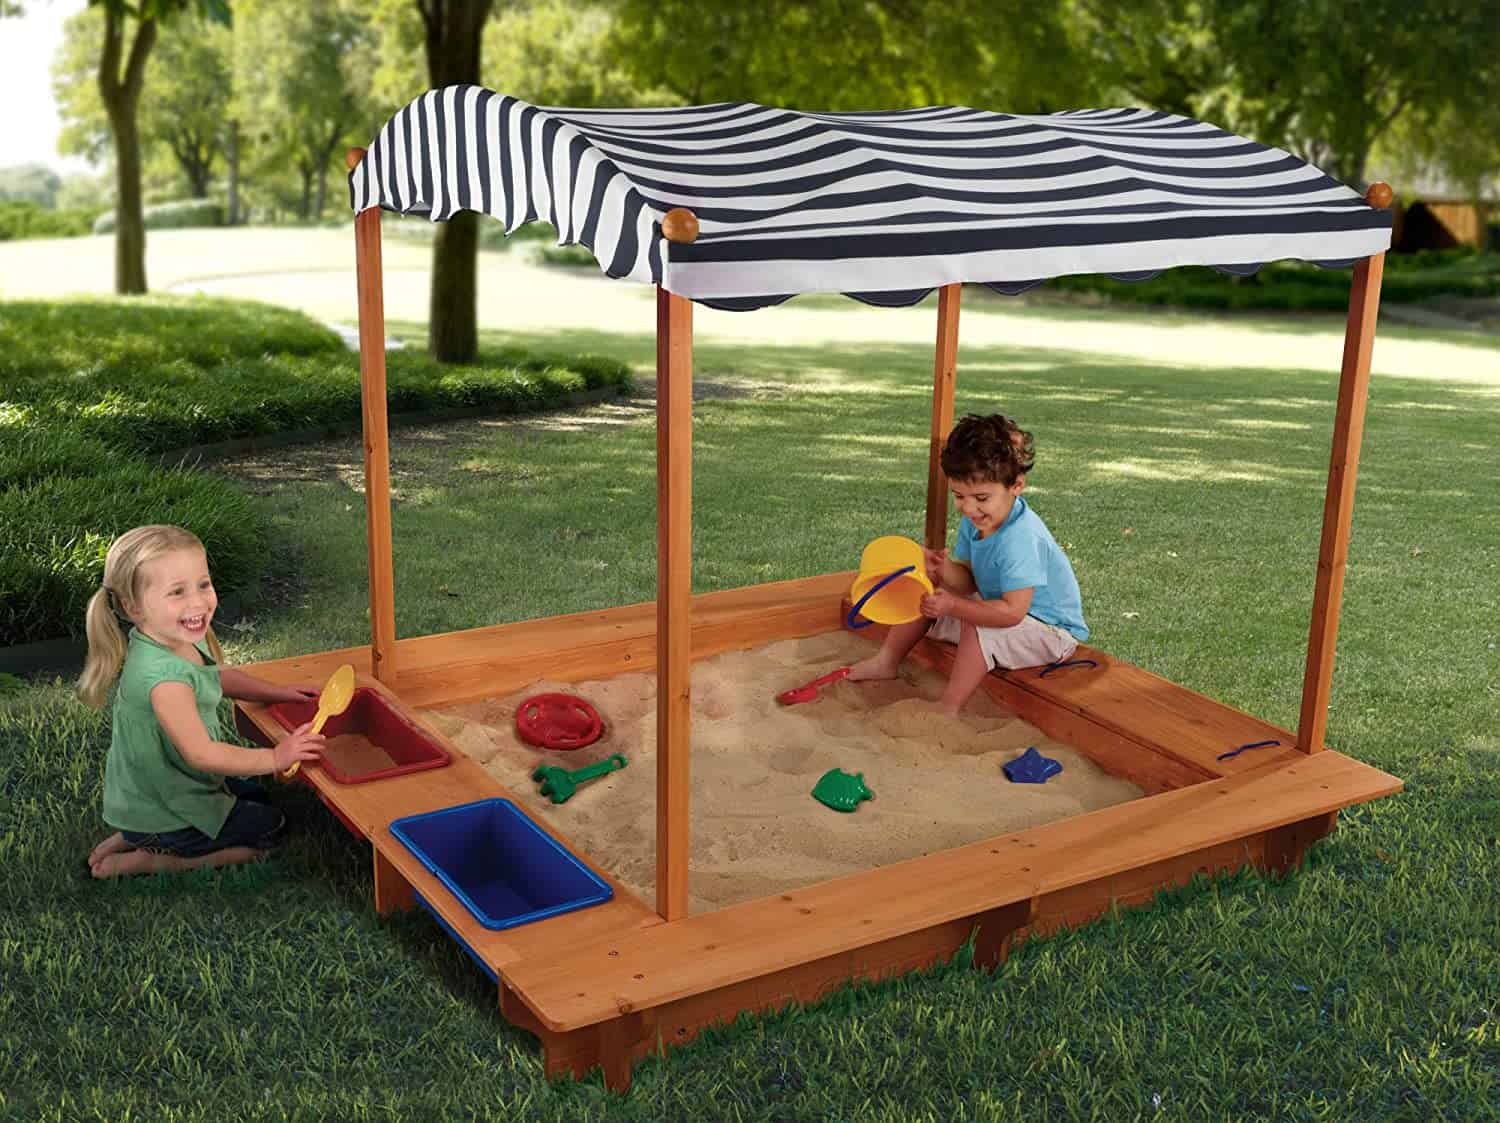 Best wooden sandbox with benches and roof- KidKraft garden sandbox with sunroof